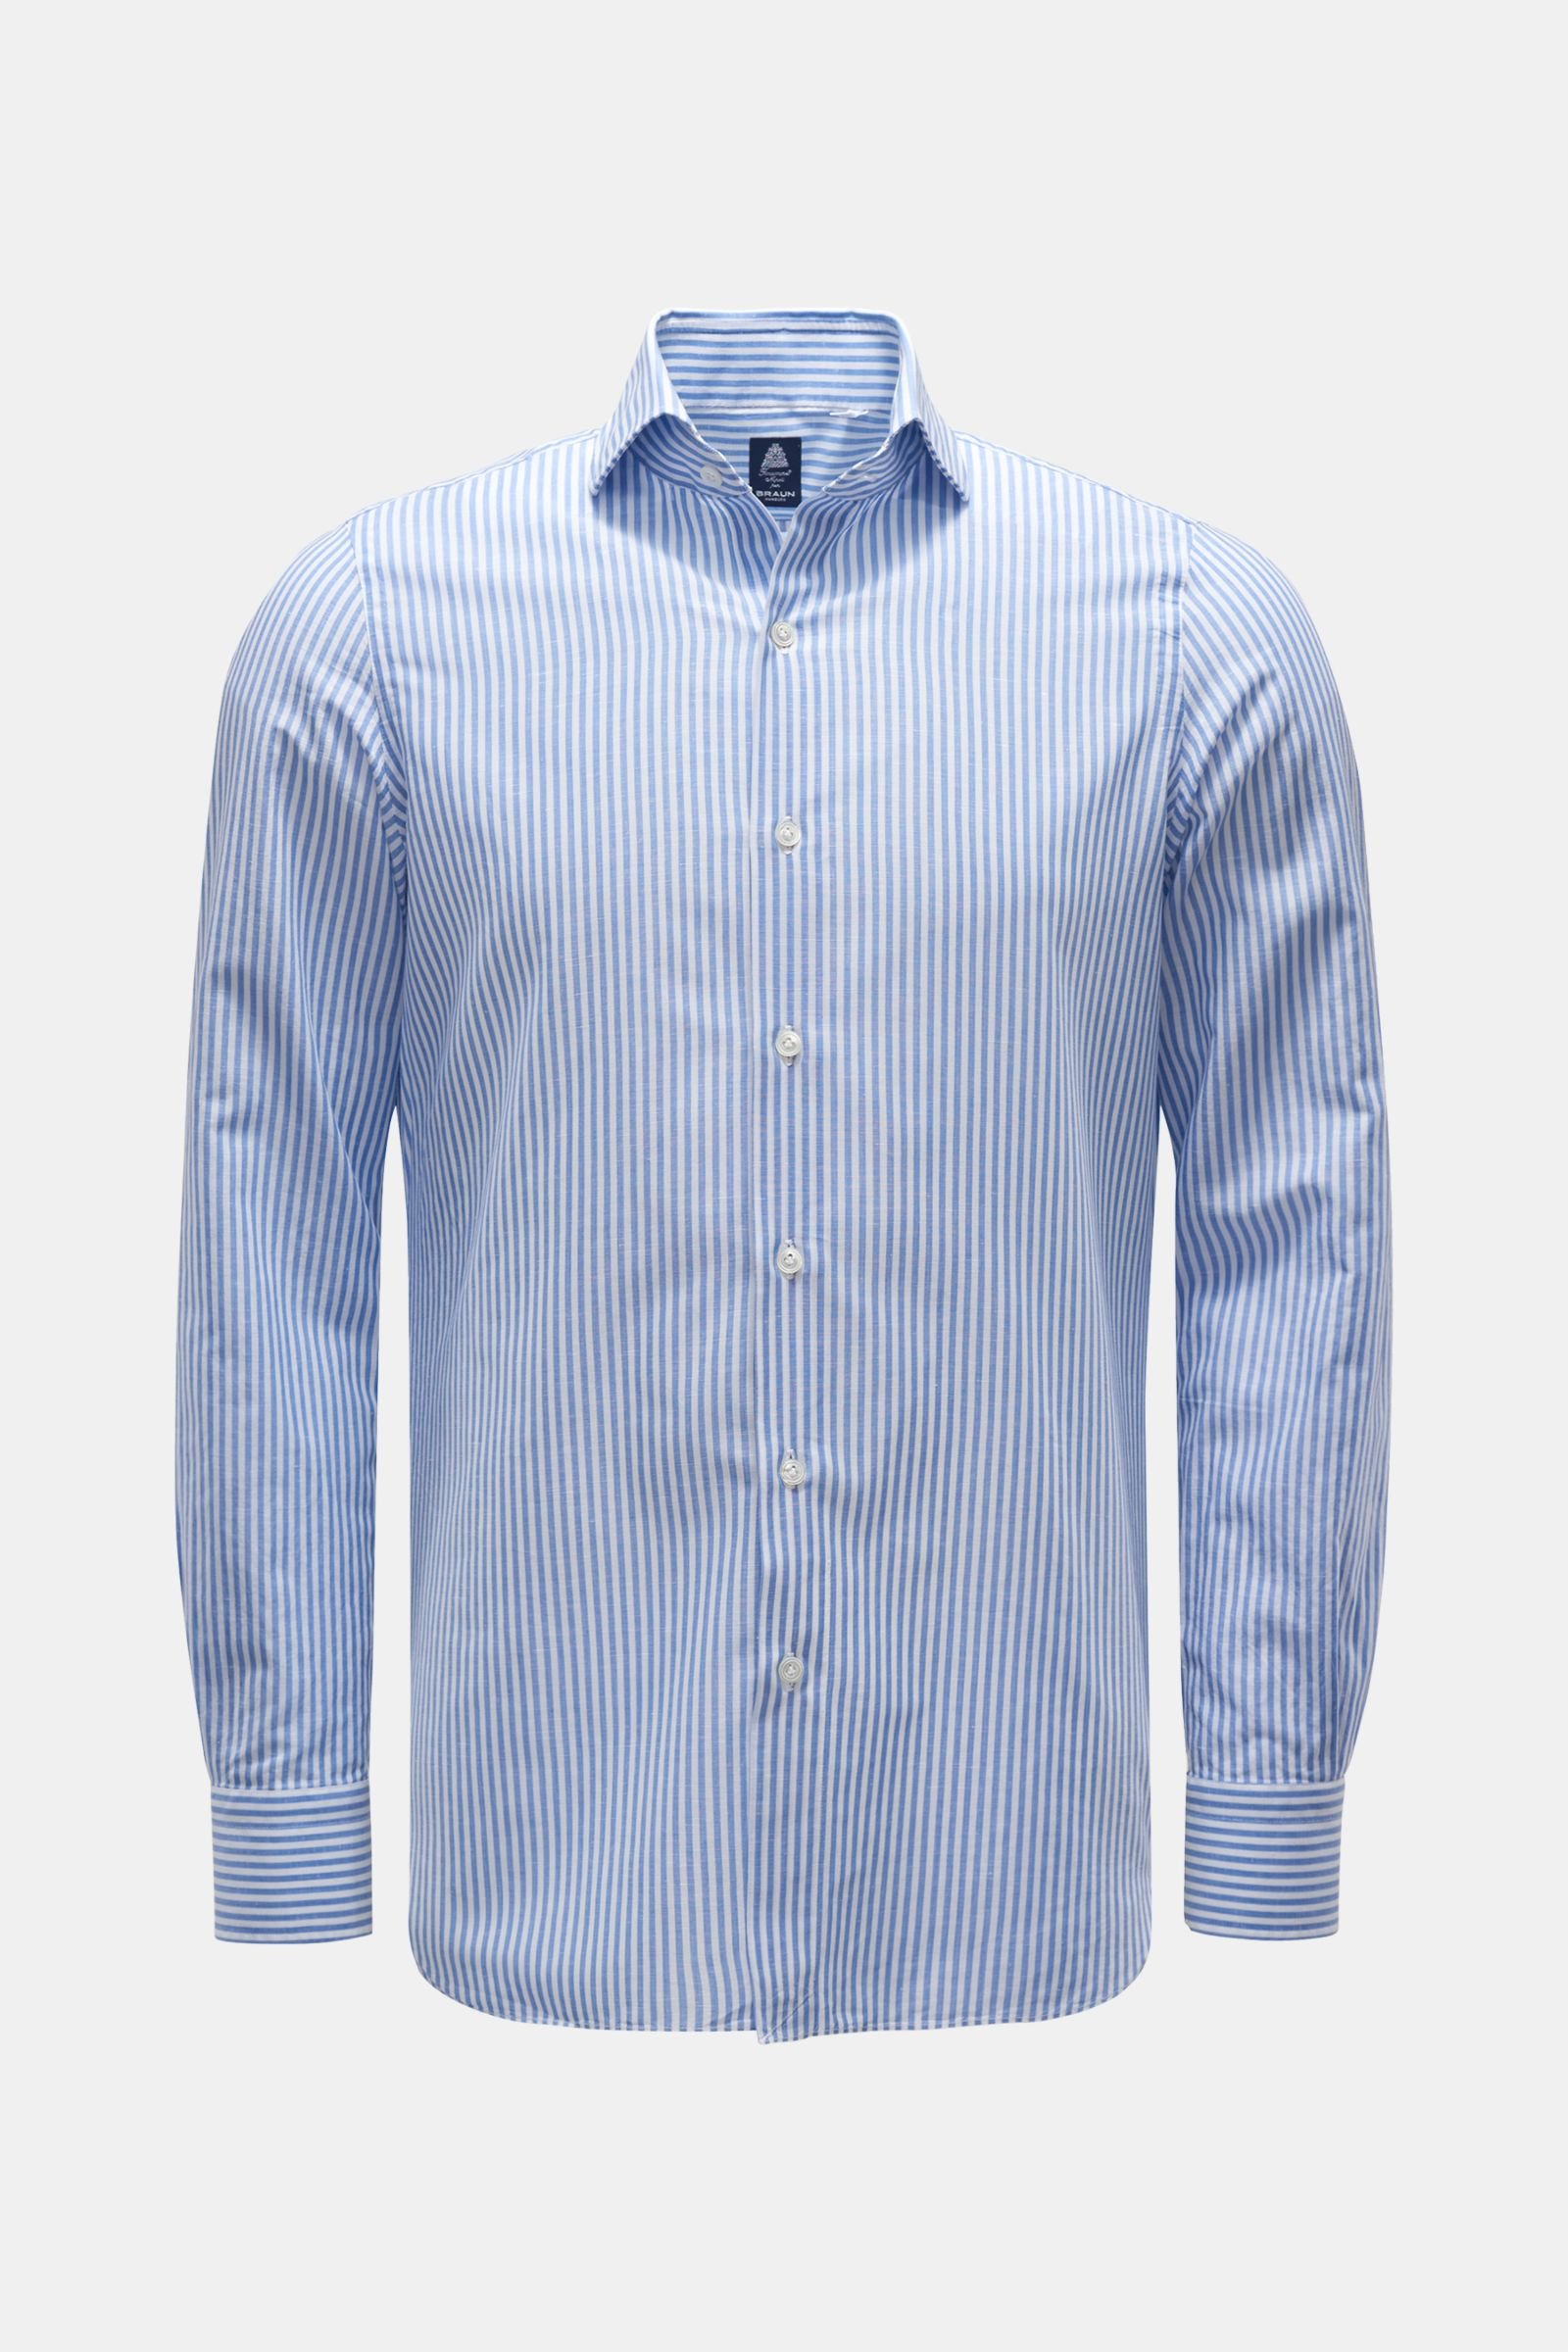 Casual shirt 'Eduardo Napoli' shark collar light blue/white striped